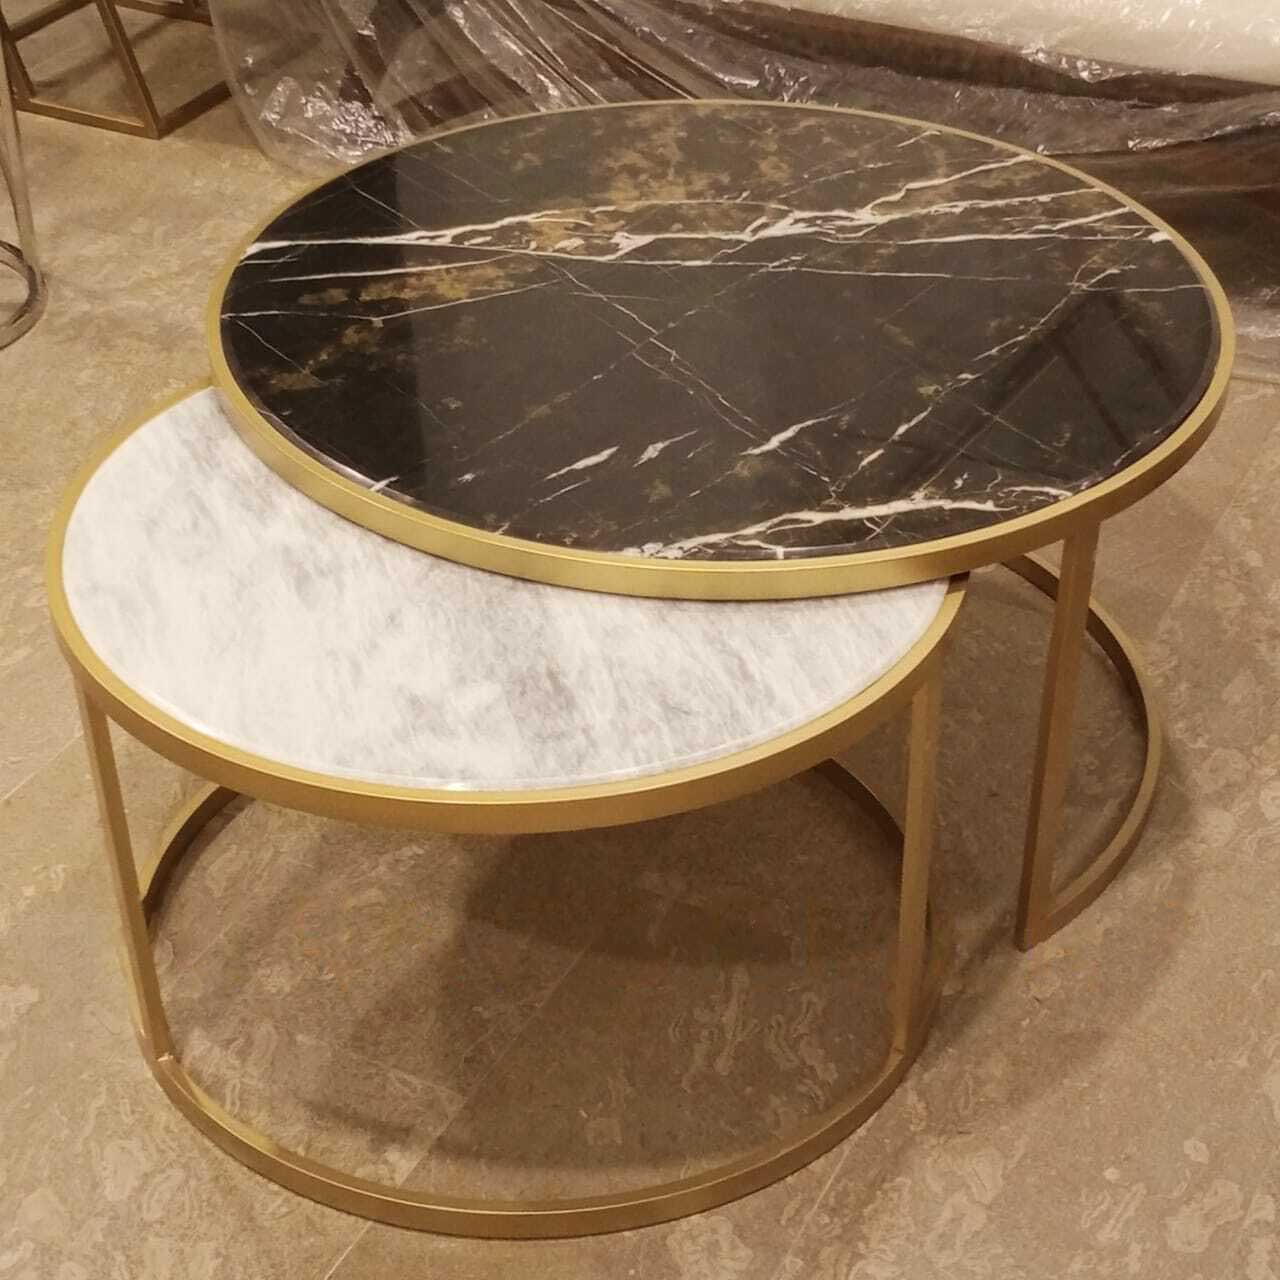 drag coffee table set